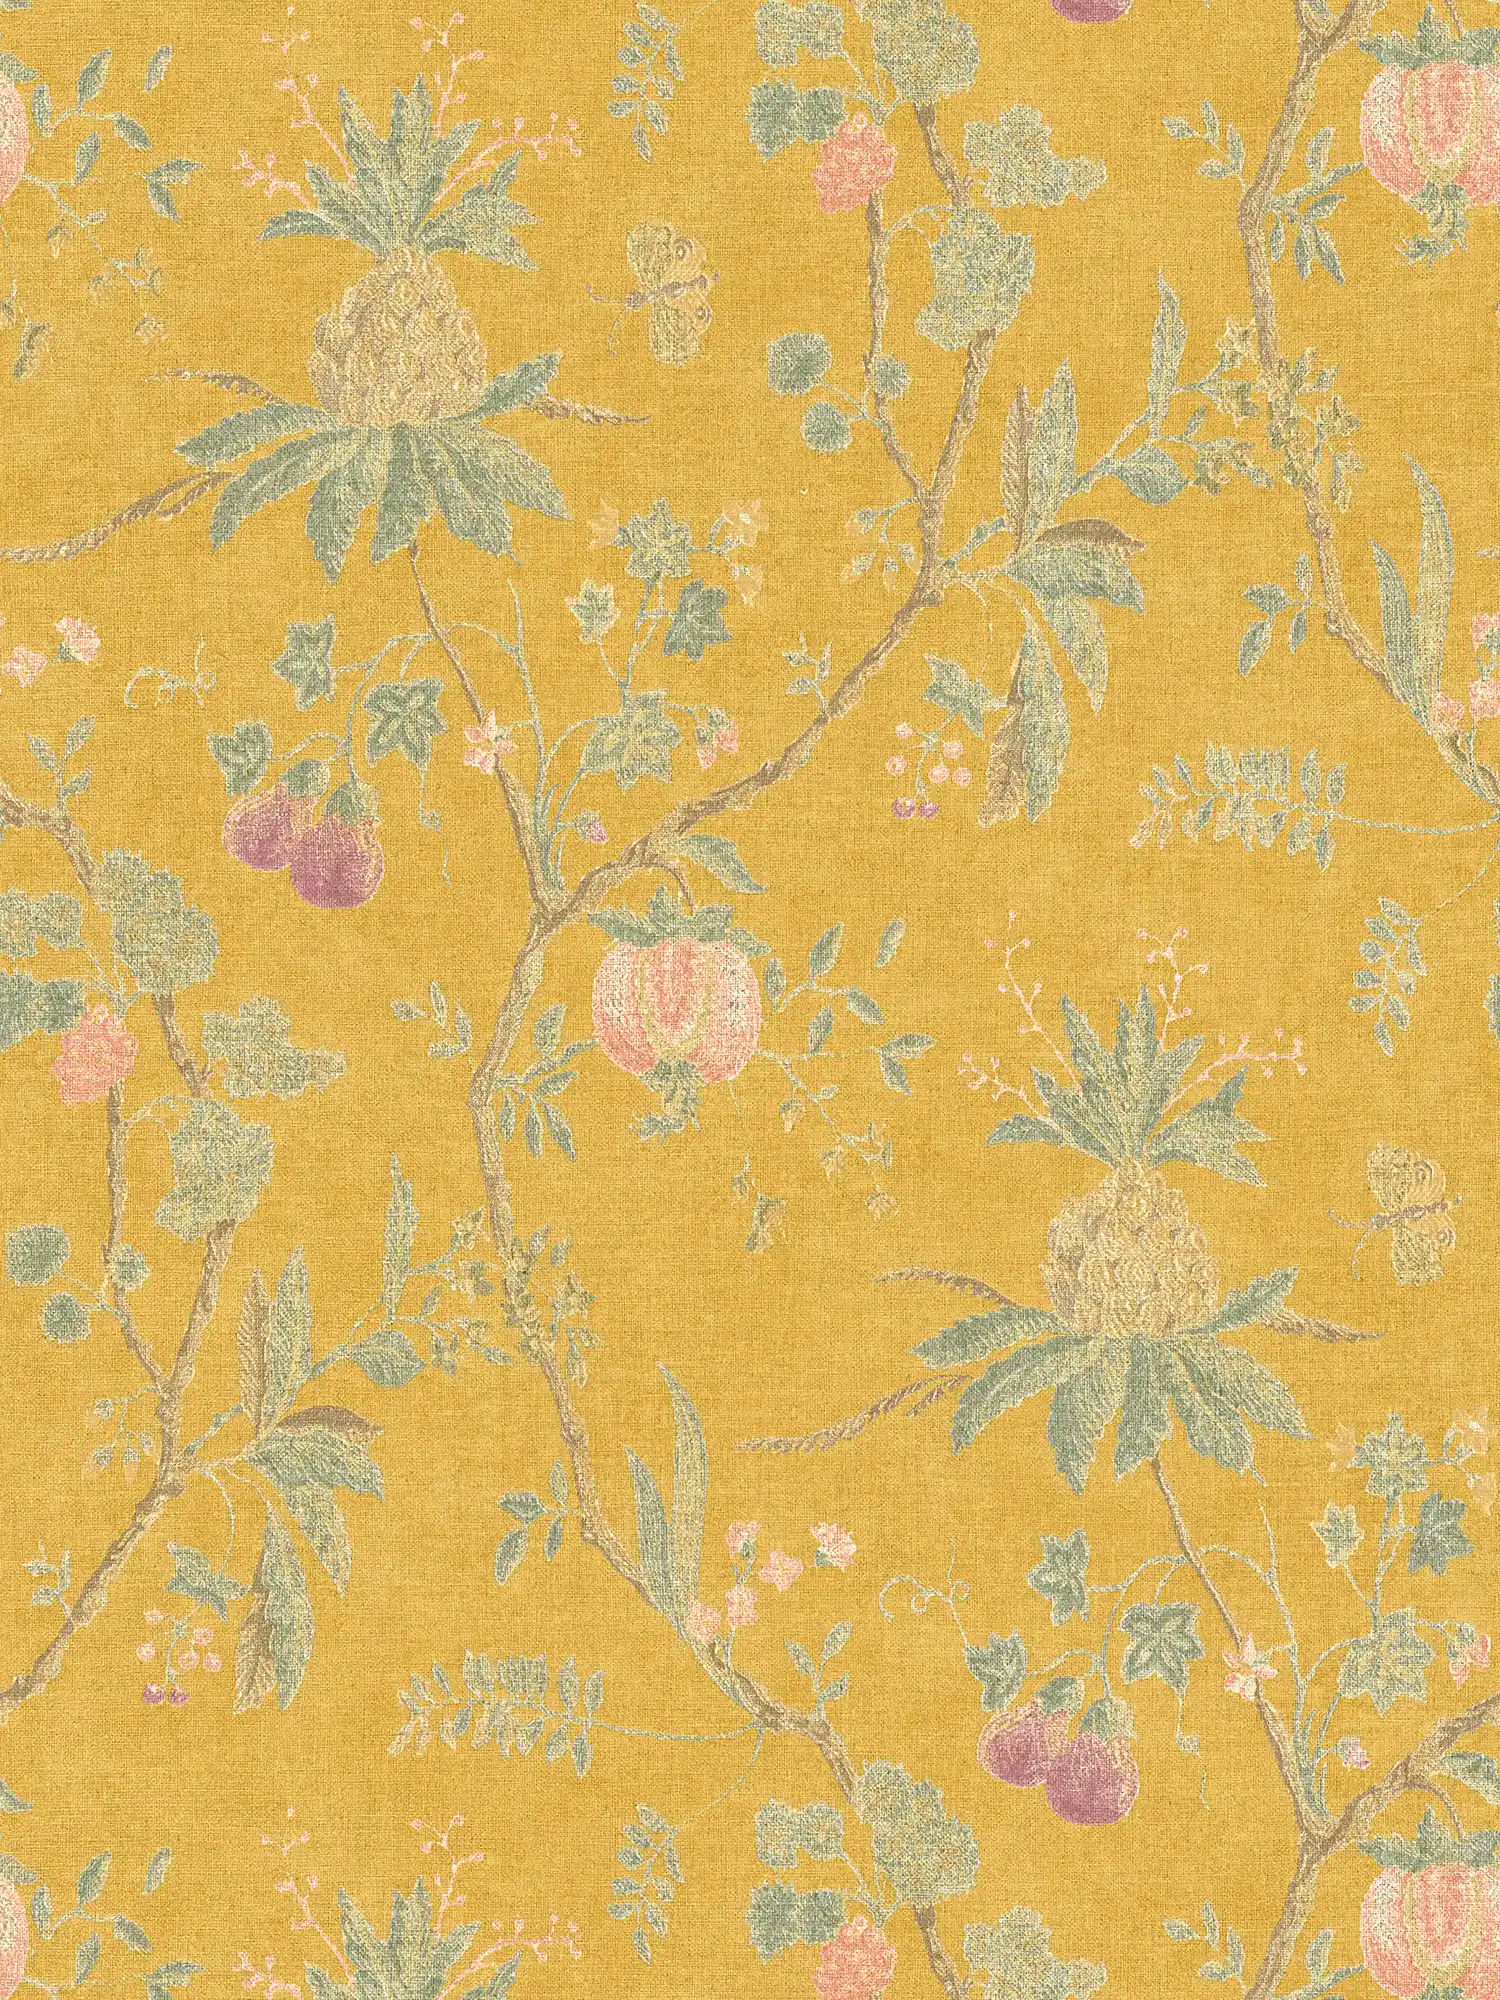 Vintage behang bloemenpatroon & linnenlook - geel
